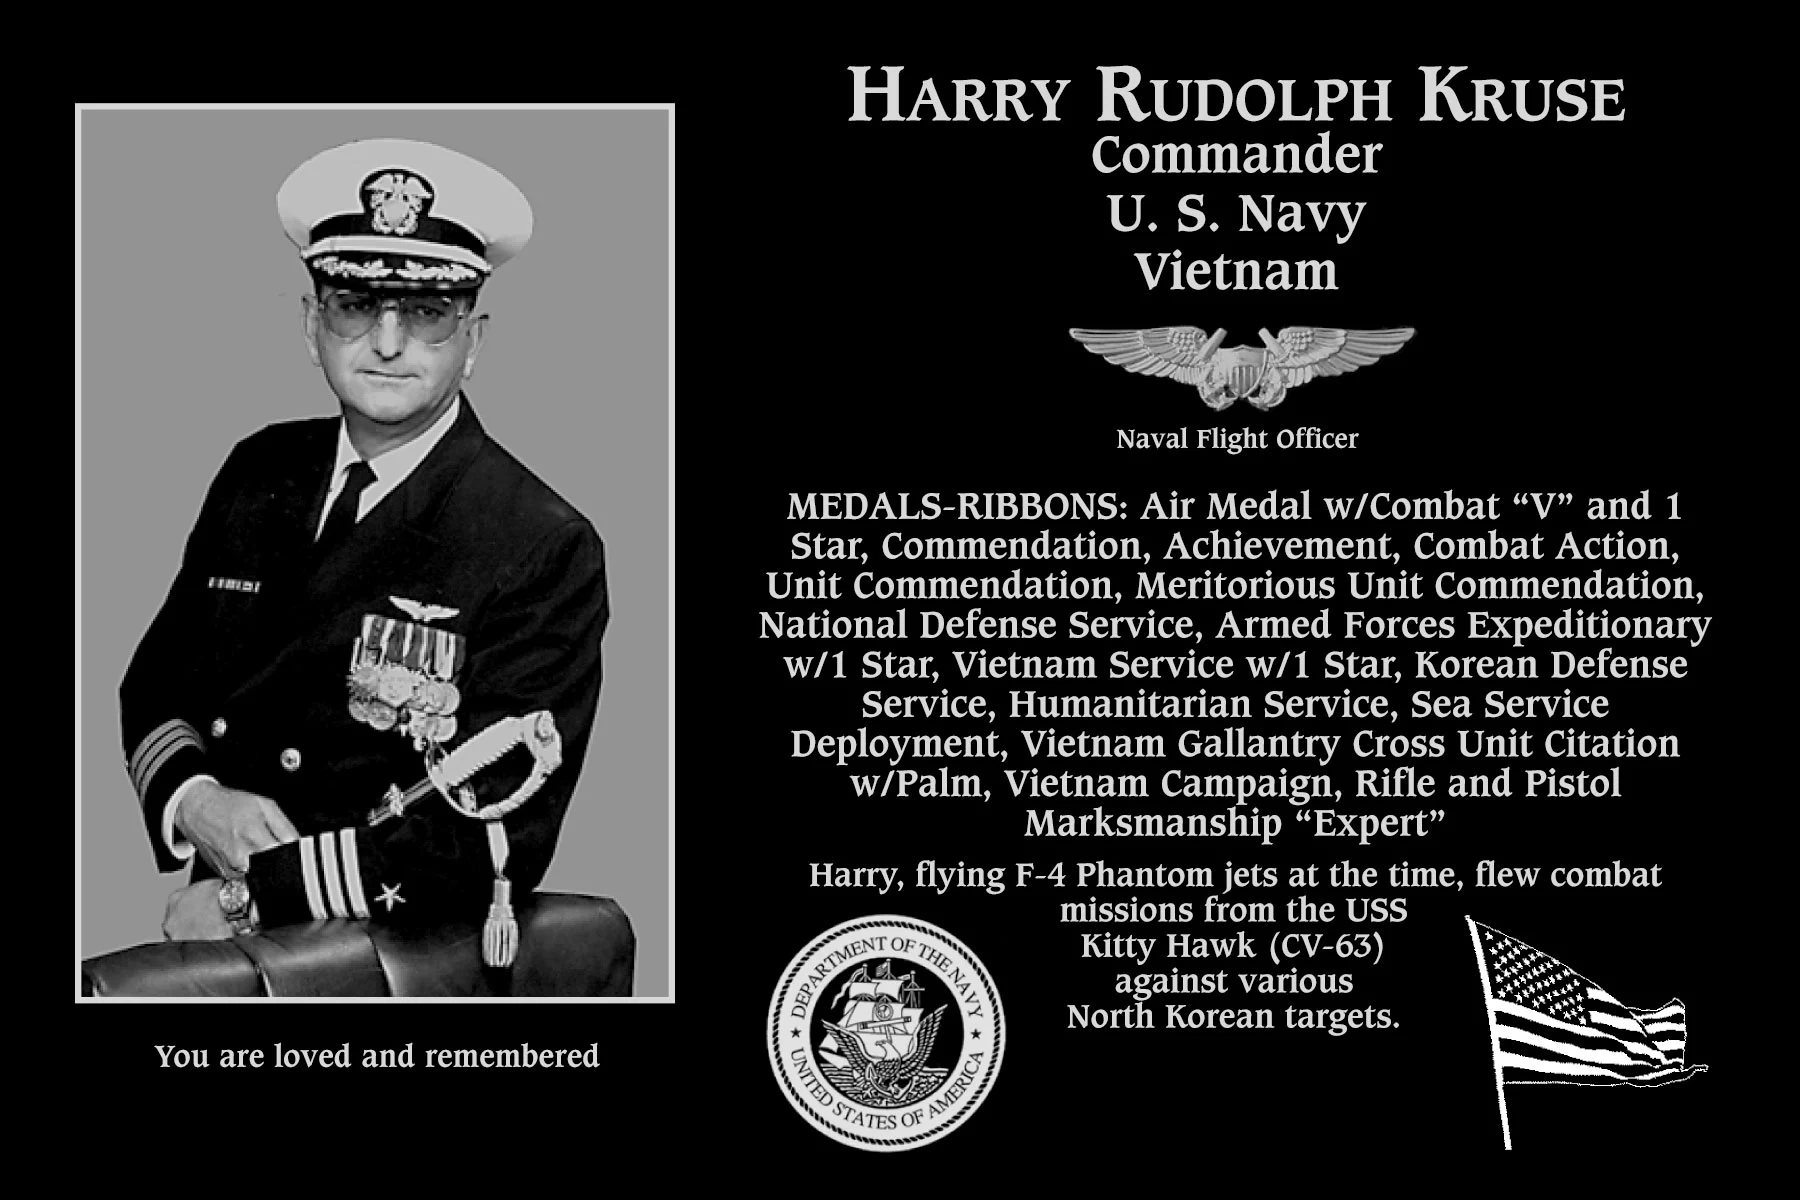 Harry Rudolph Kruse